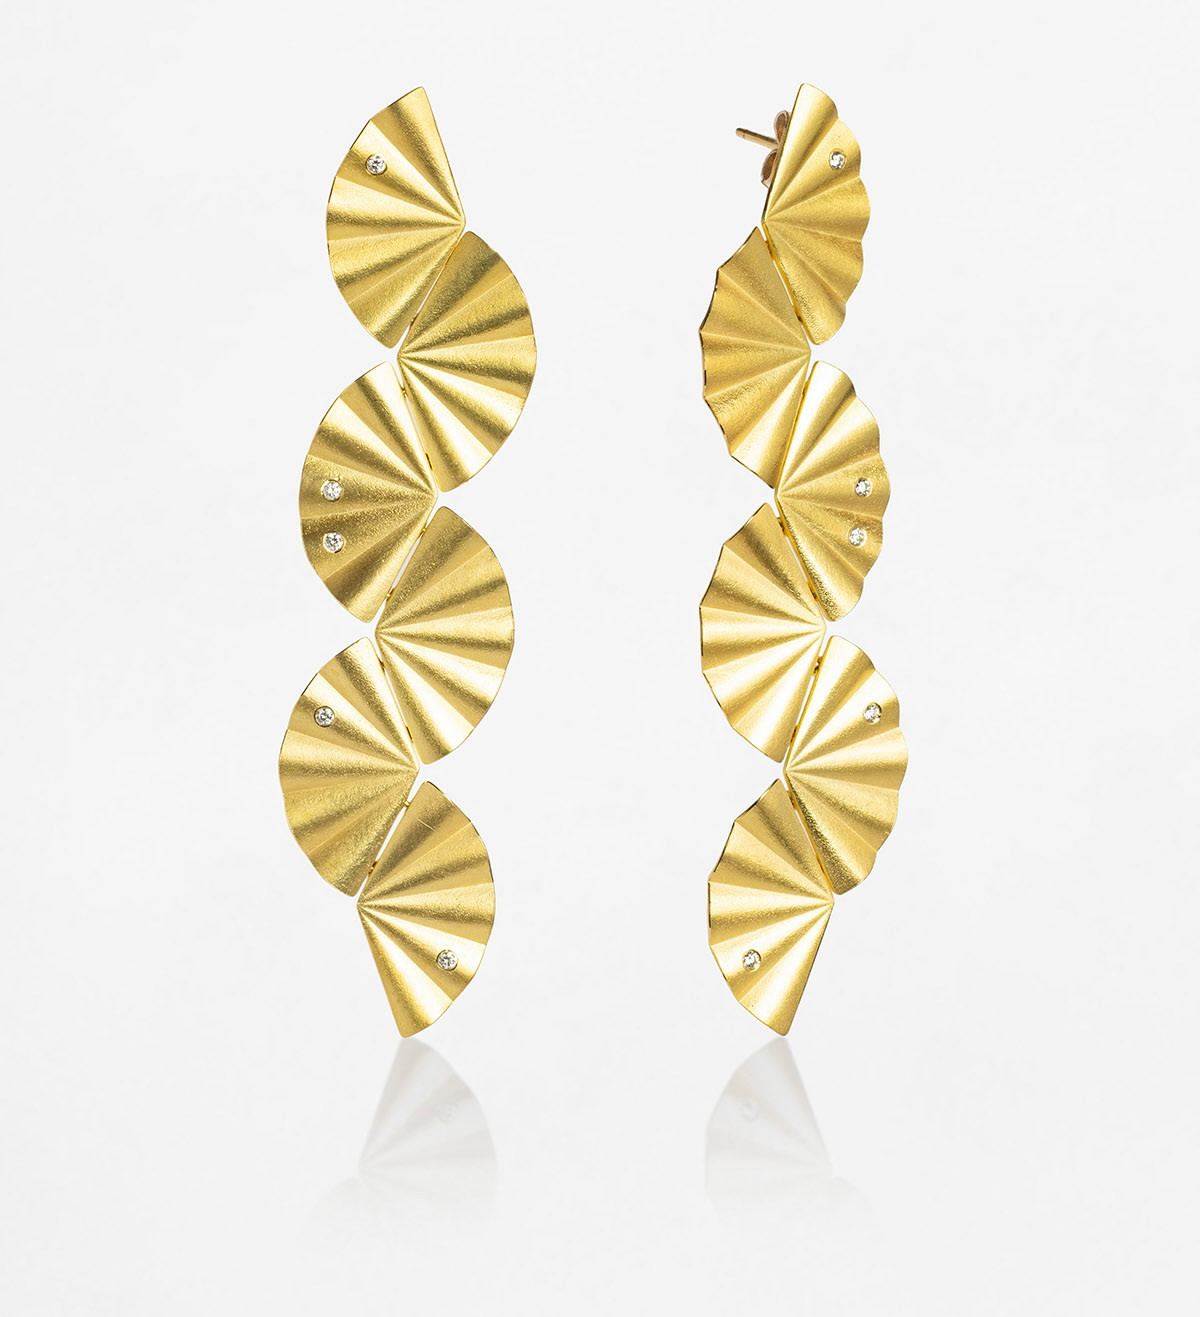 18k gold earrings Maiko with diamonds 0,15ct